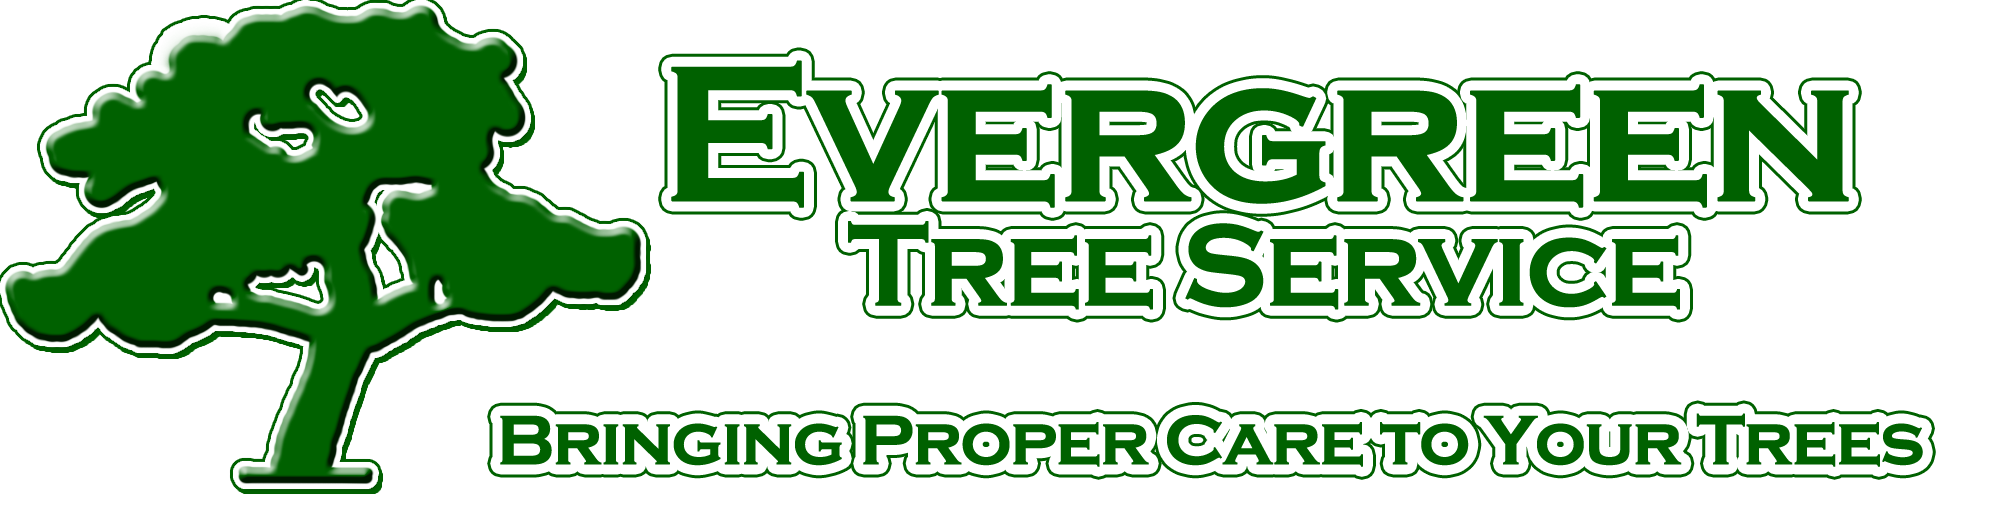 Evergreen Tree Service Mobile Alabama